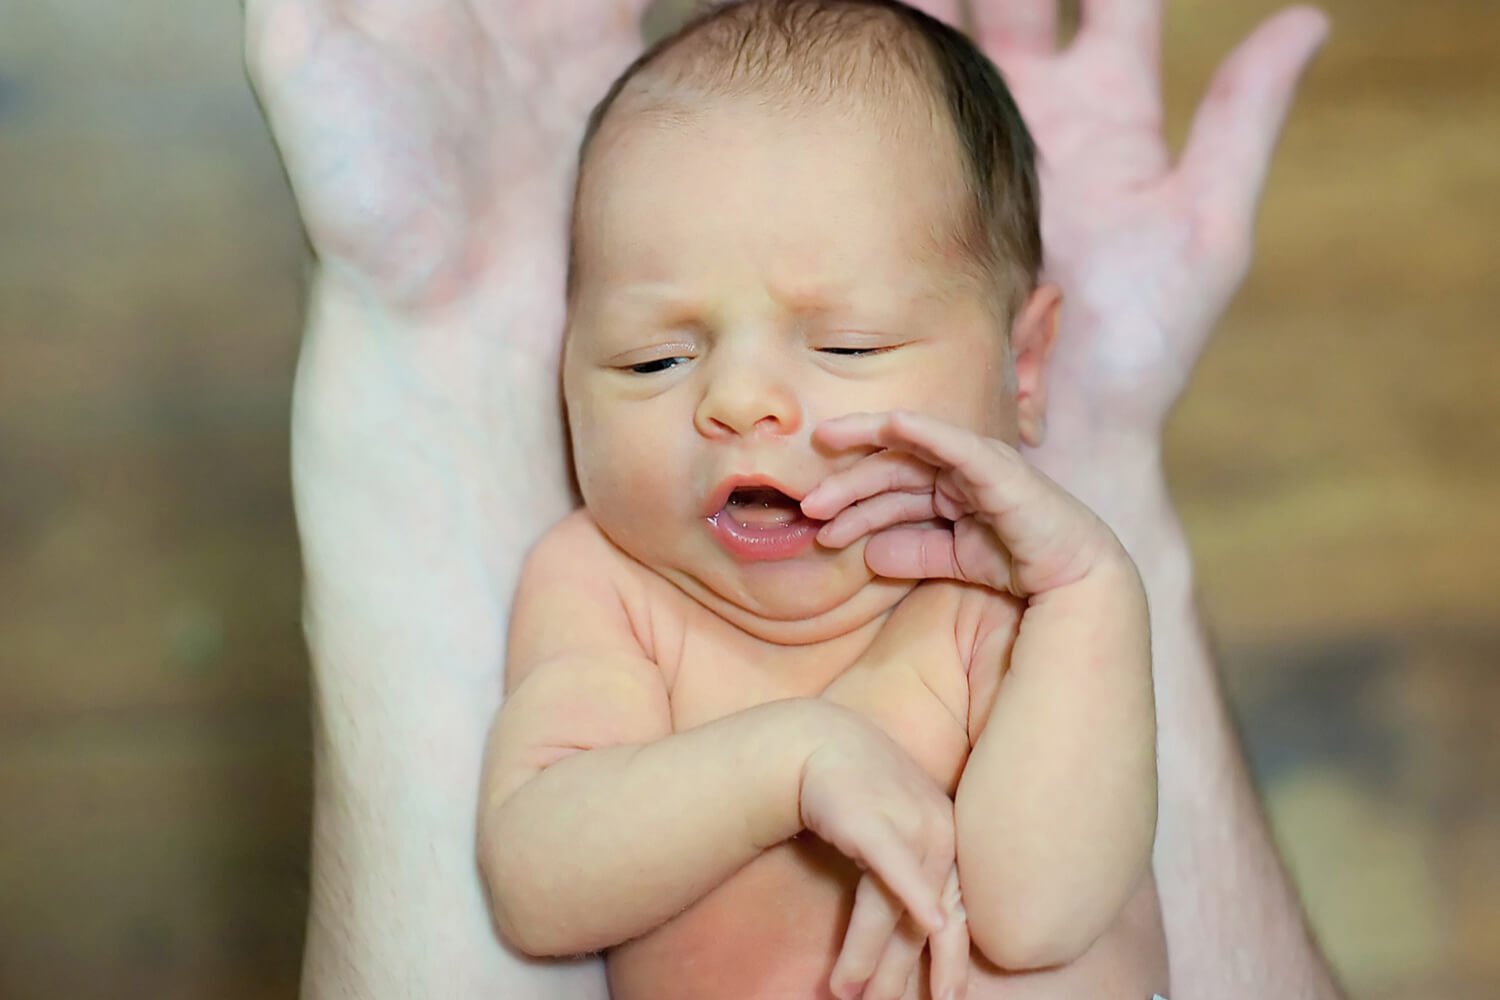 Signs And Symptoms Of Jaundice In Newborn Babies